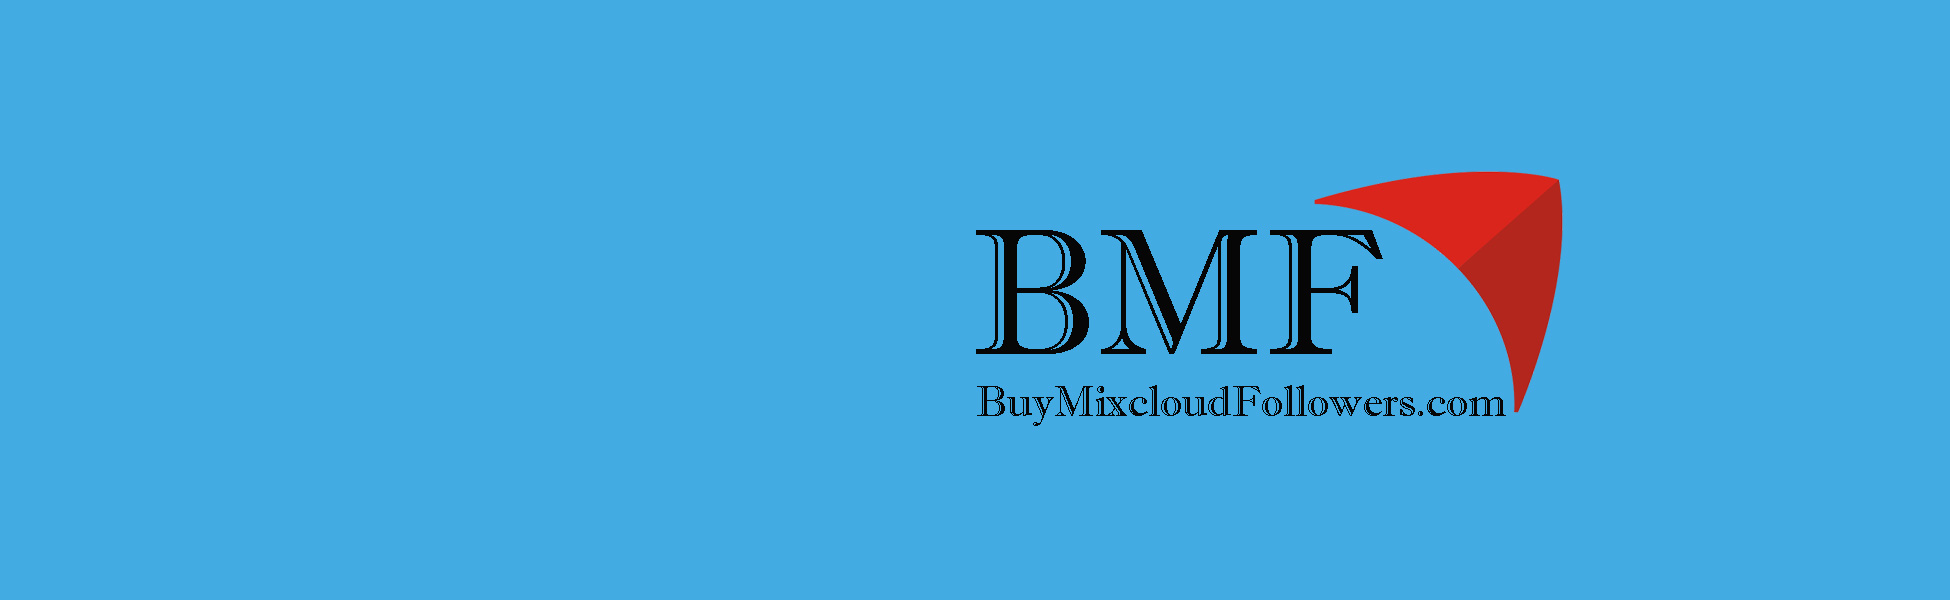 Buy MixCloud Followers